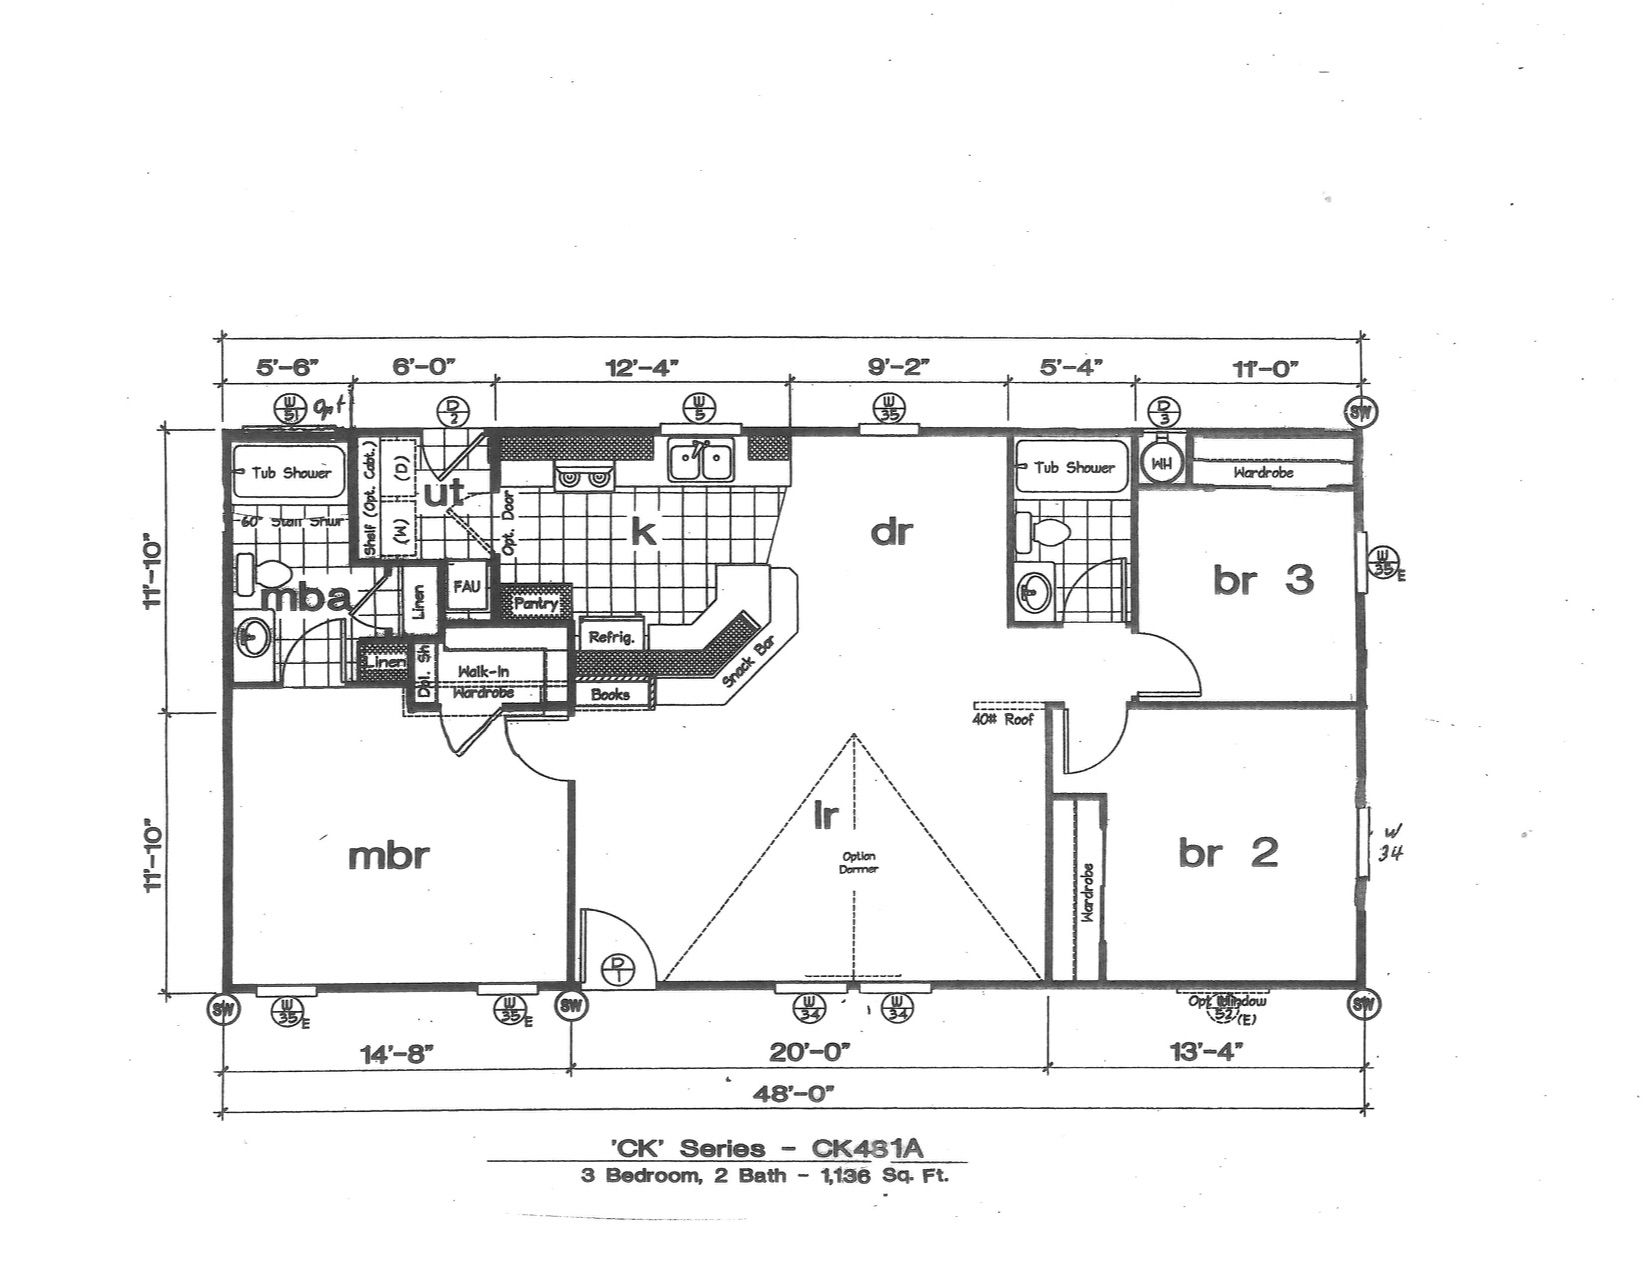 Homes Direct Modular Homes - Model CK481A - Floorplan